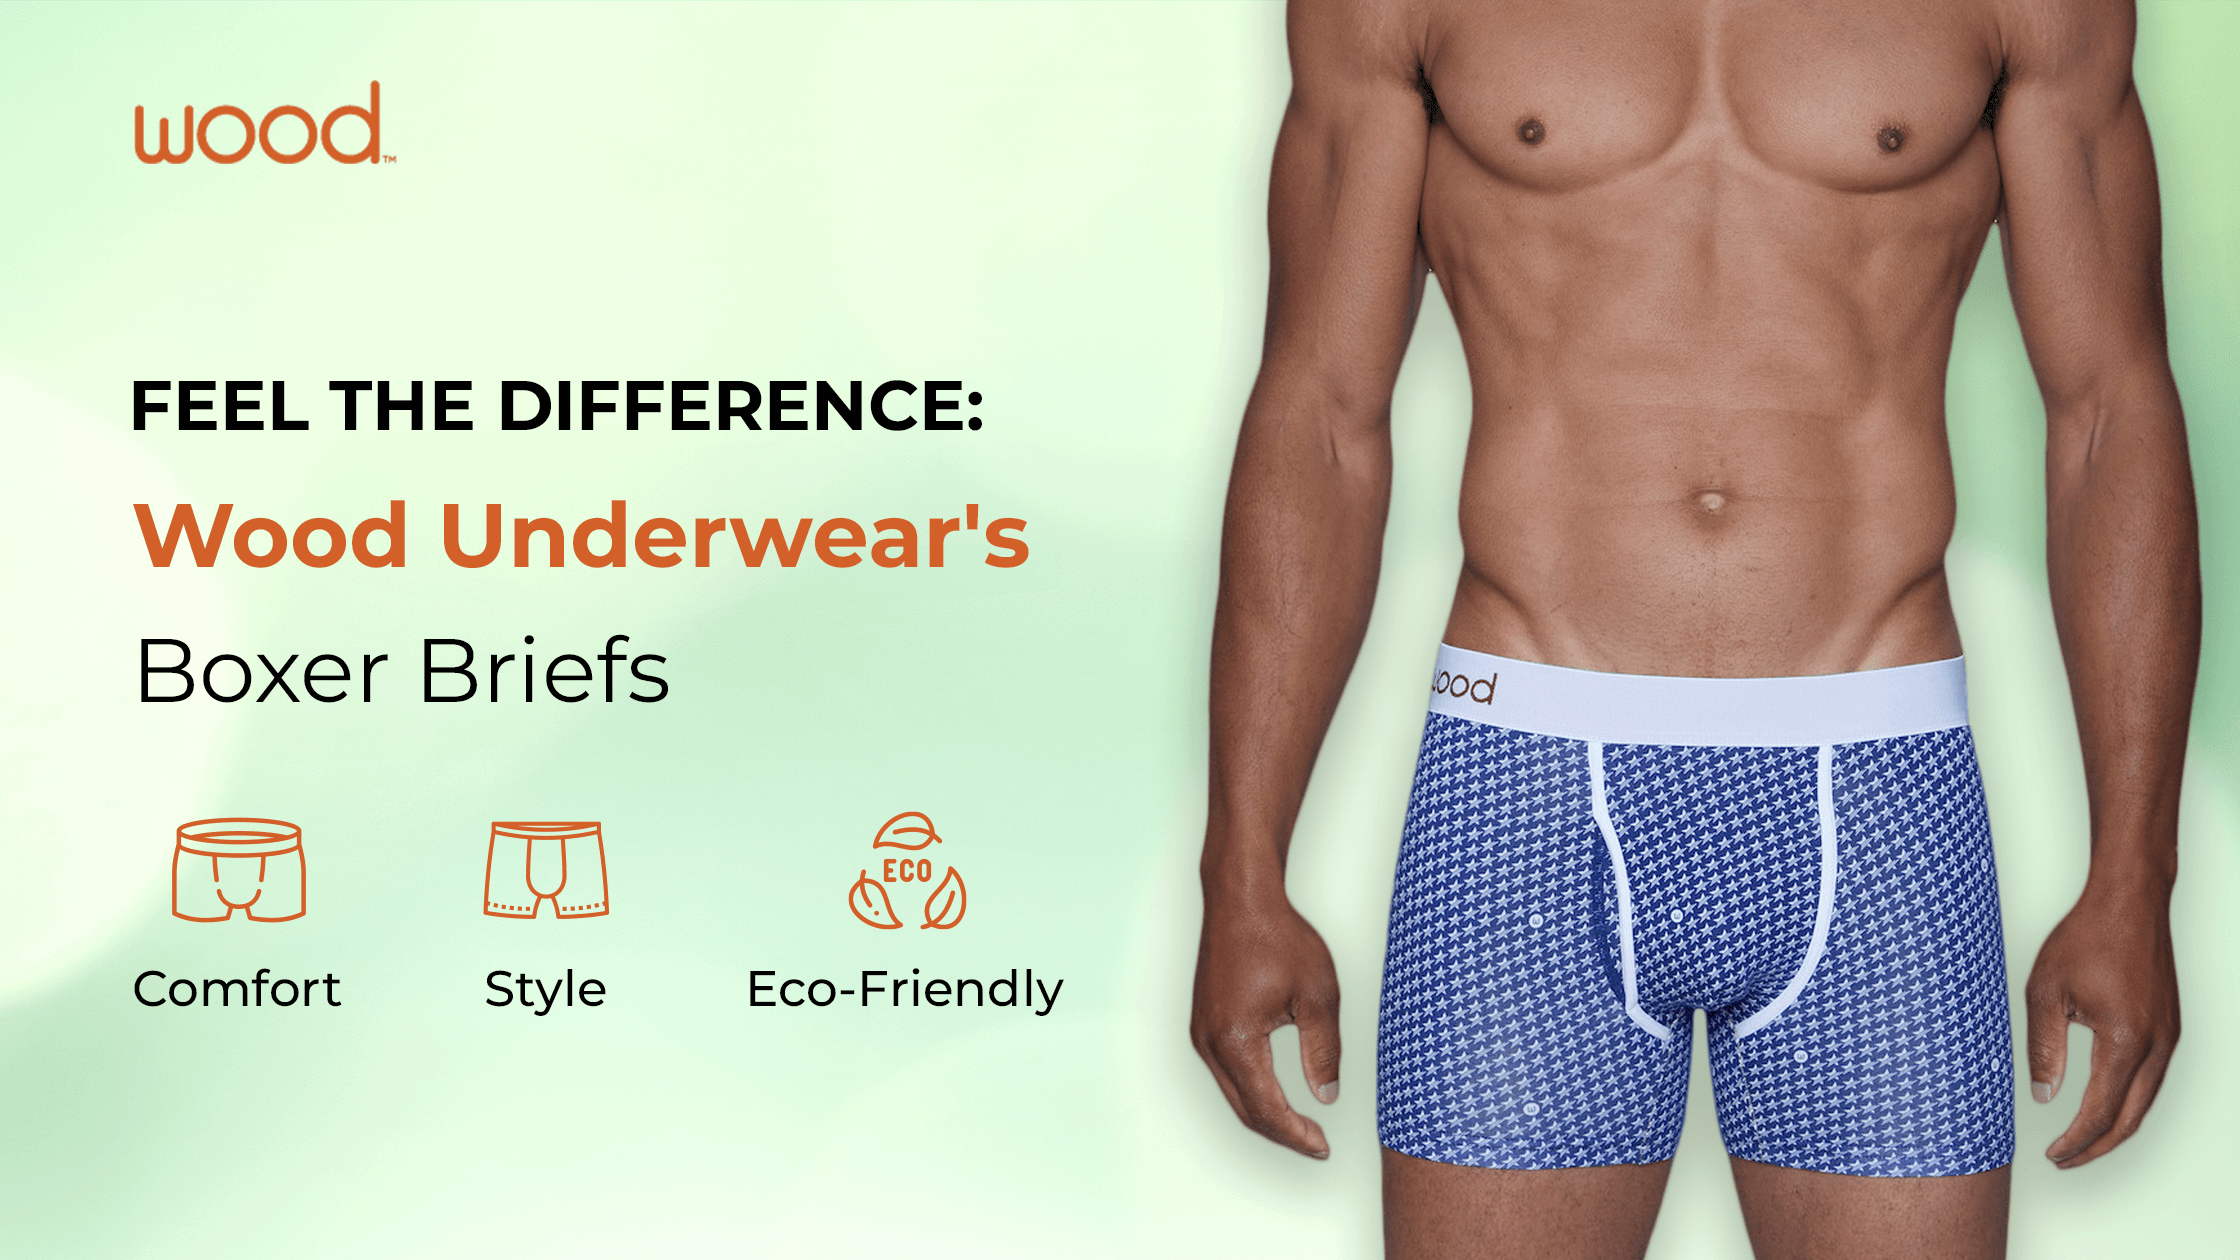 Benefits of Wearing Boxer Briefs from Wood Underwear